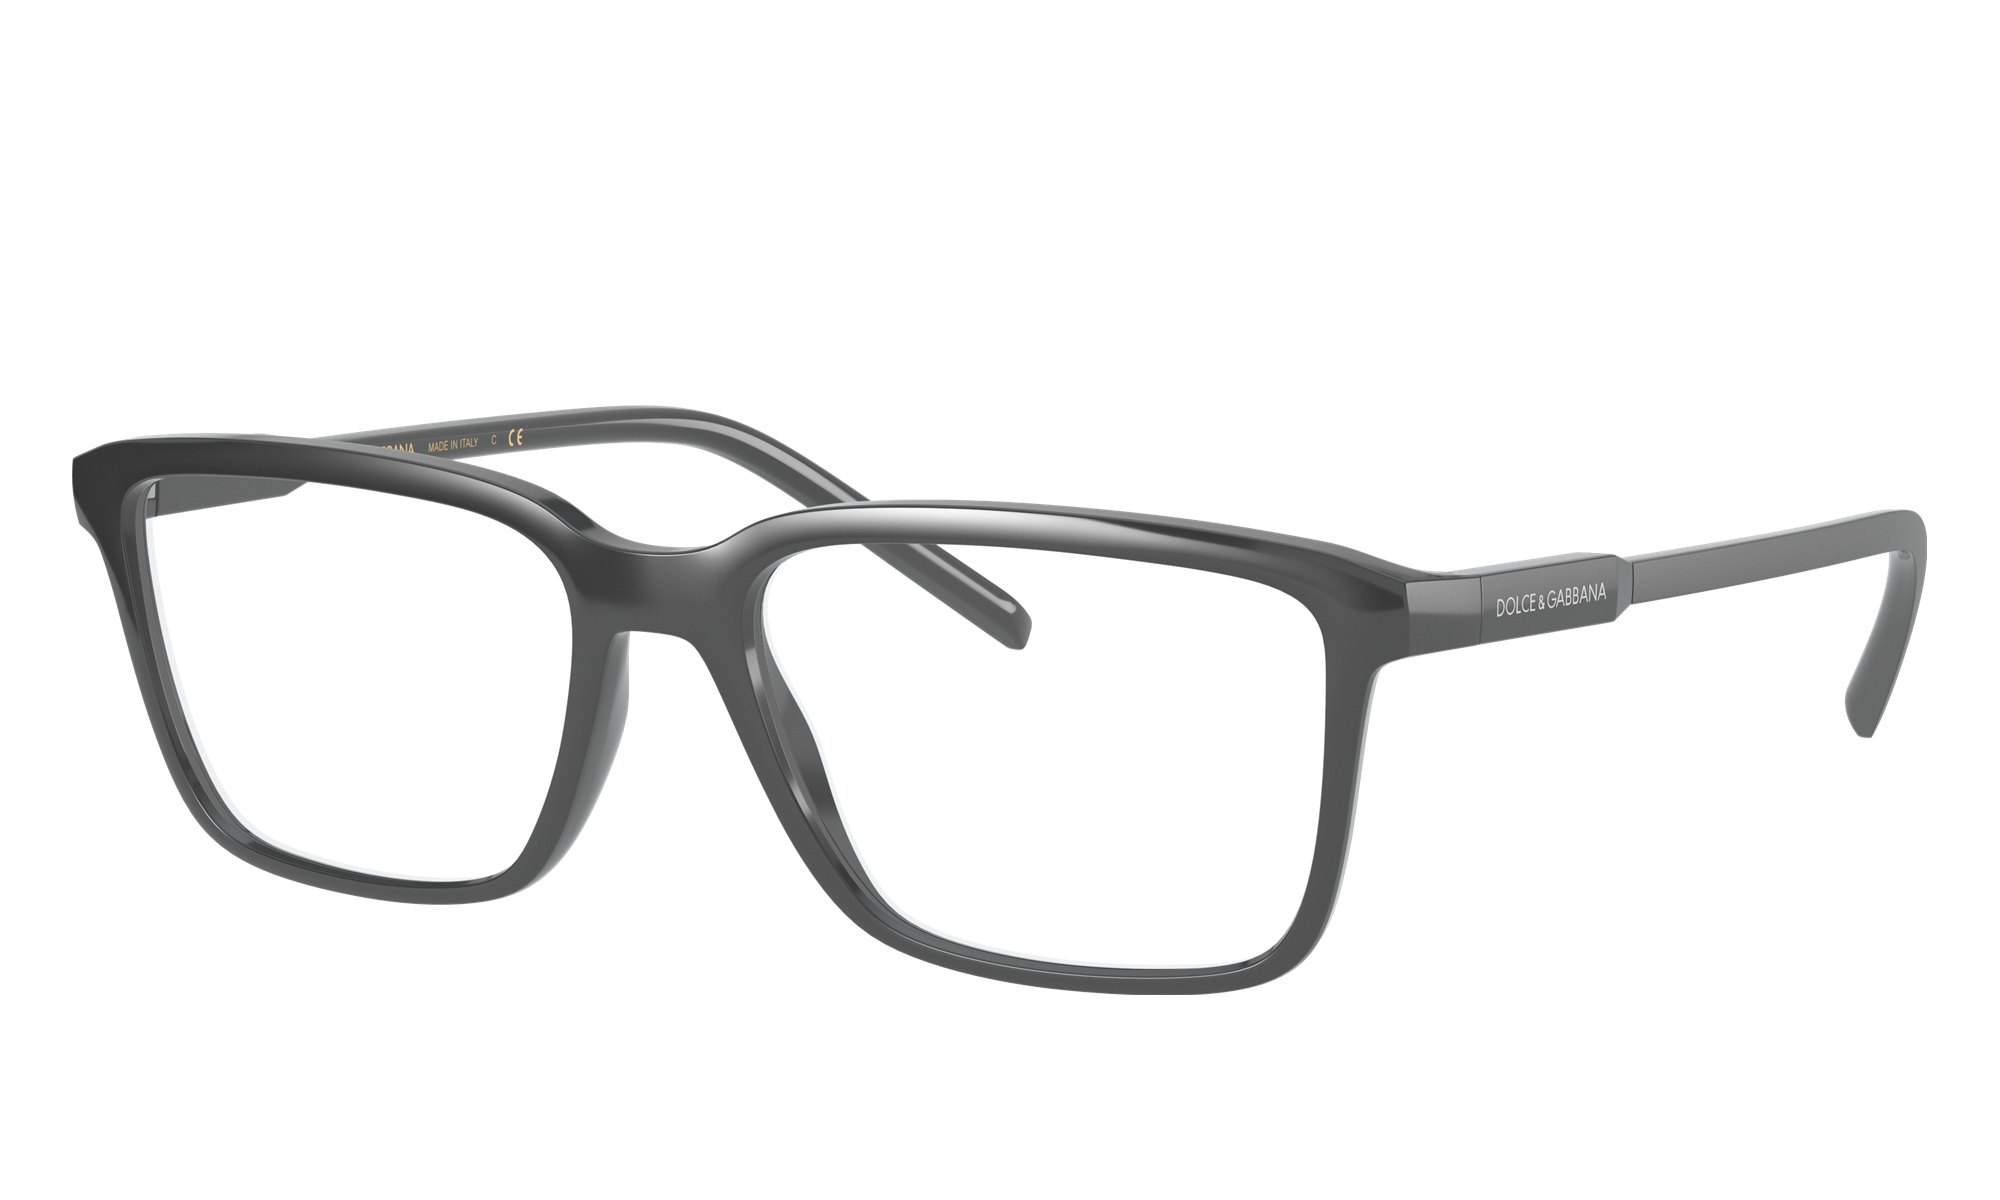 Dolce & Gabbana DG5061 Grey Eyeglasses | Glasses.com® | Free Shipping